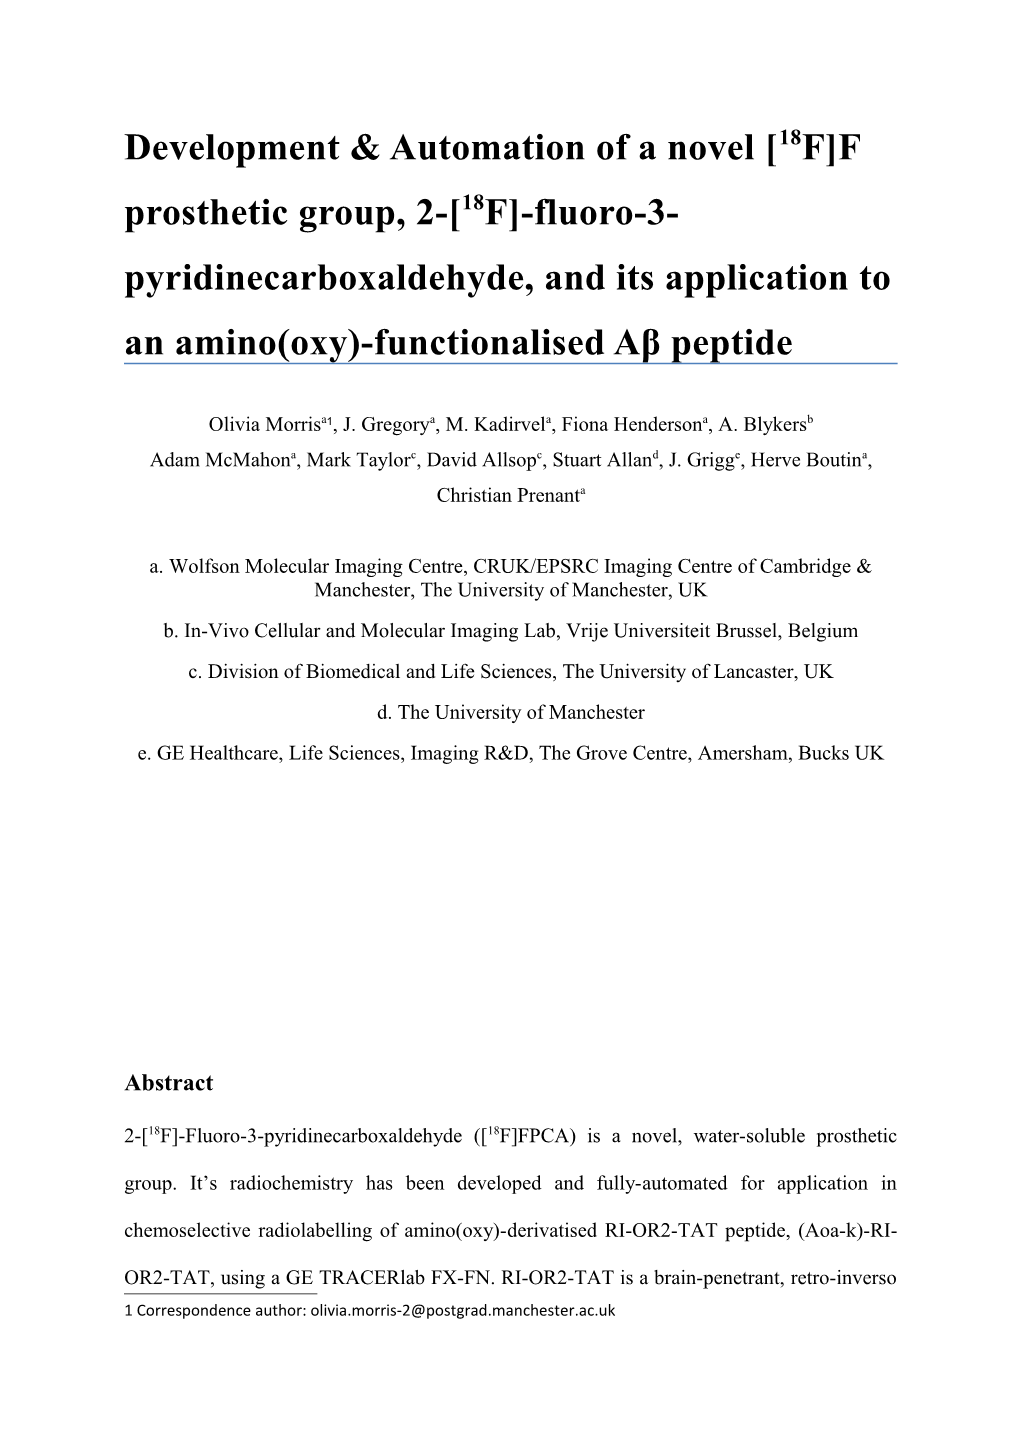 Development & Automation of a Novel 18F F Prosthetic Group, 2- 18F -Fluoro-3-Pyridine